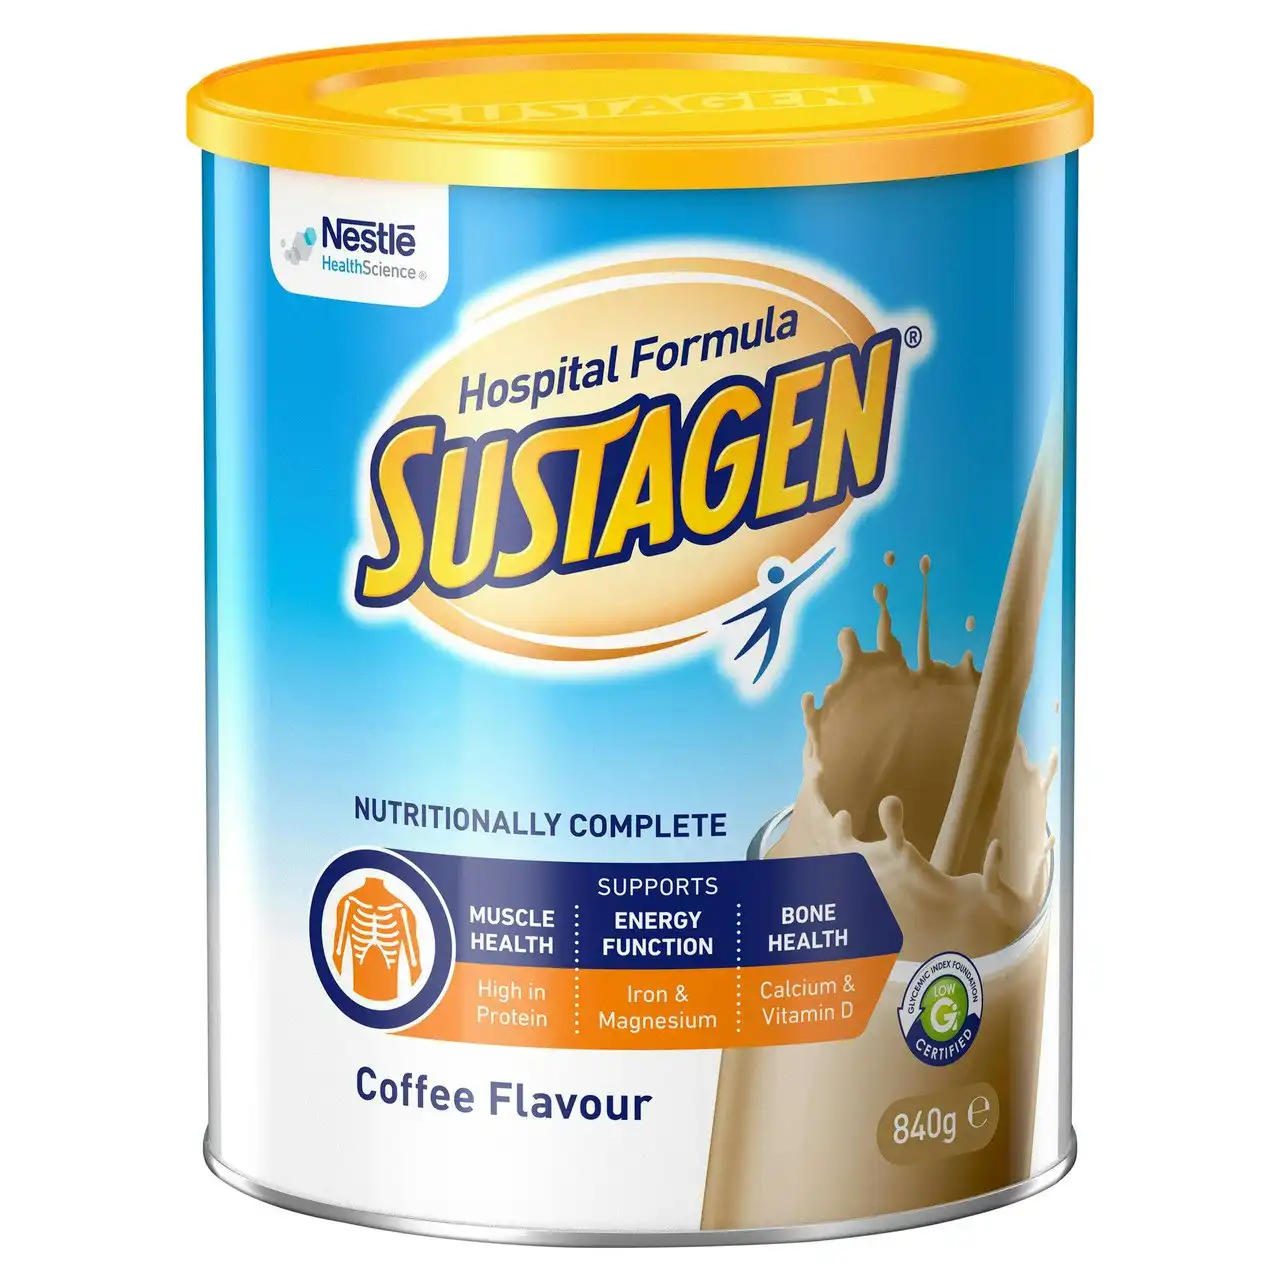 SUSTAGEN(R) Hospital Formula Coffee 840g Powder Nutritional Supplement